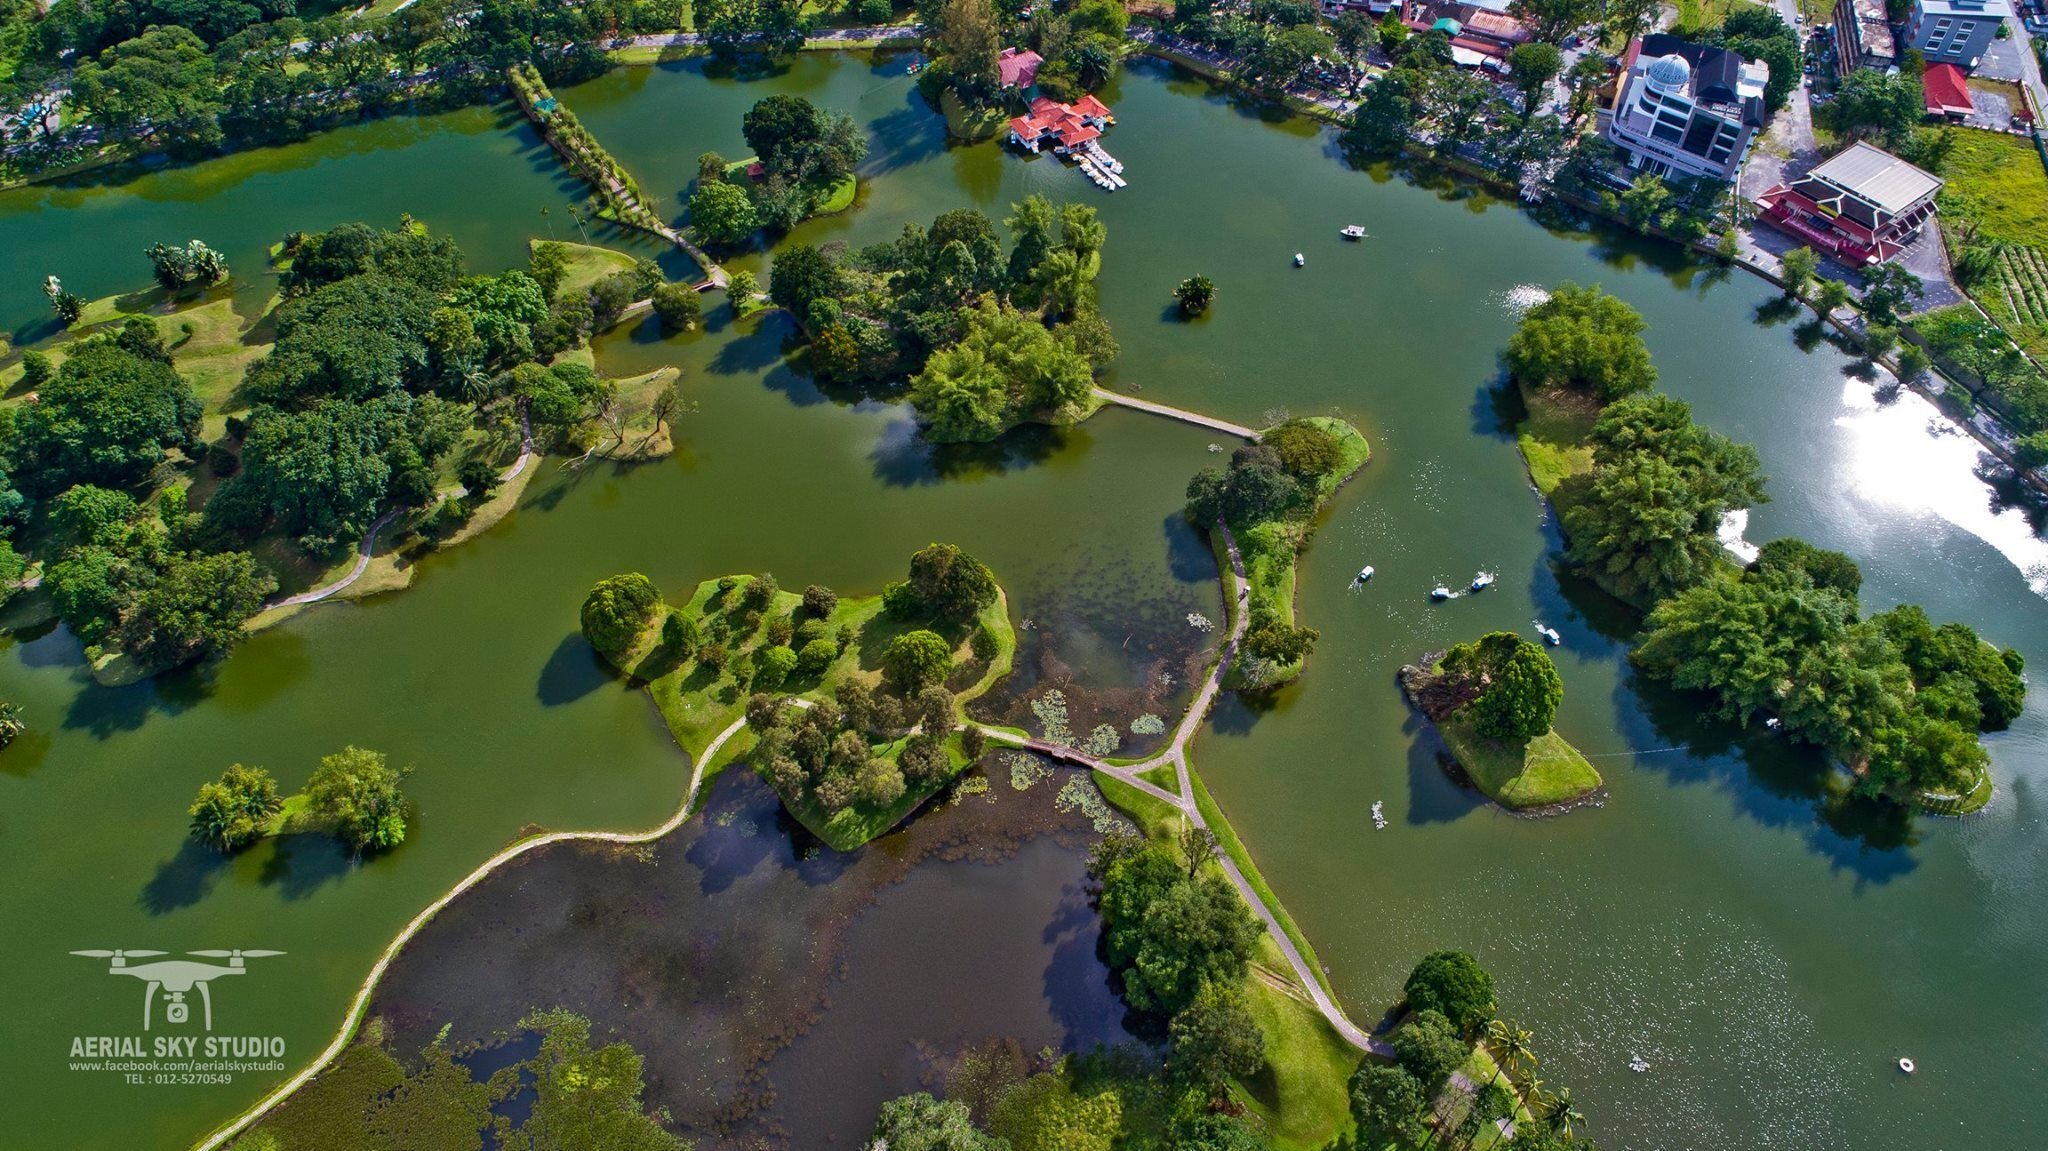 Taiping Lake Gardens for recreational activities